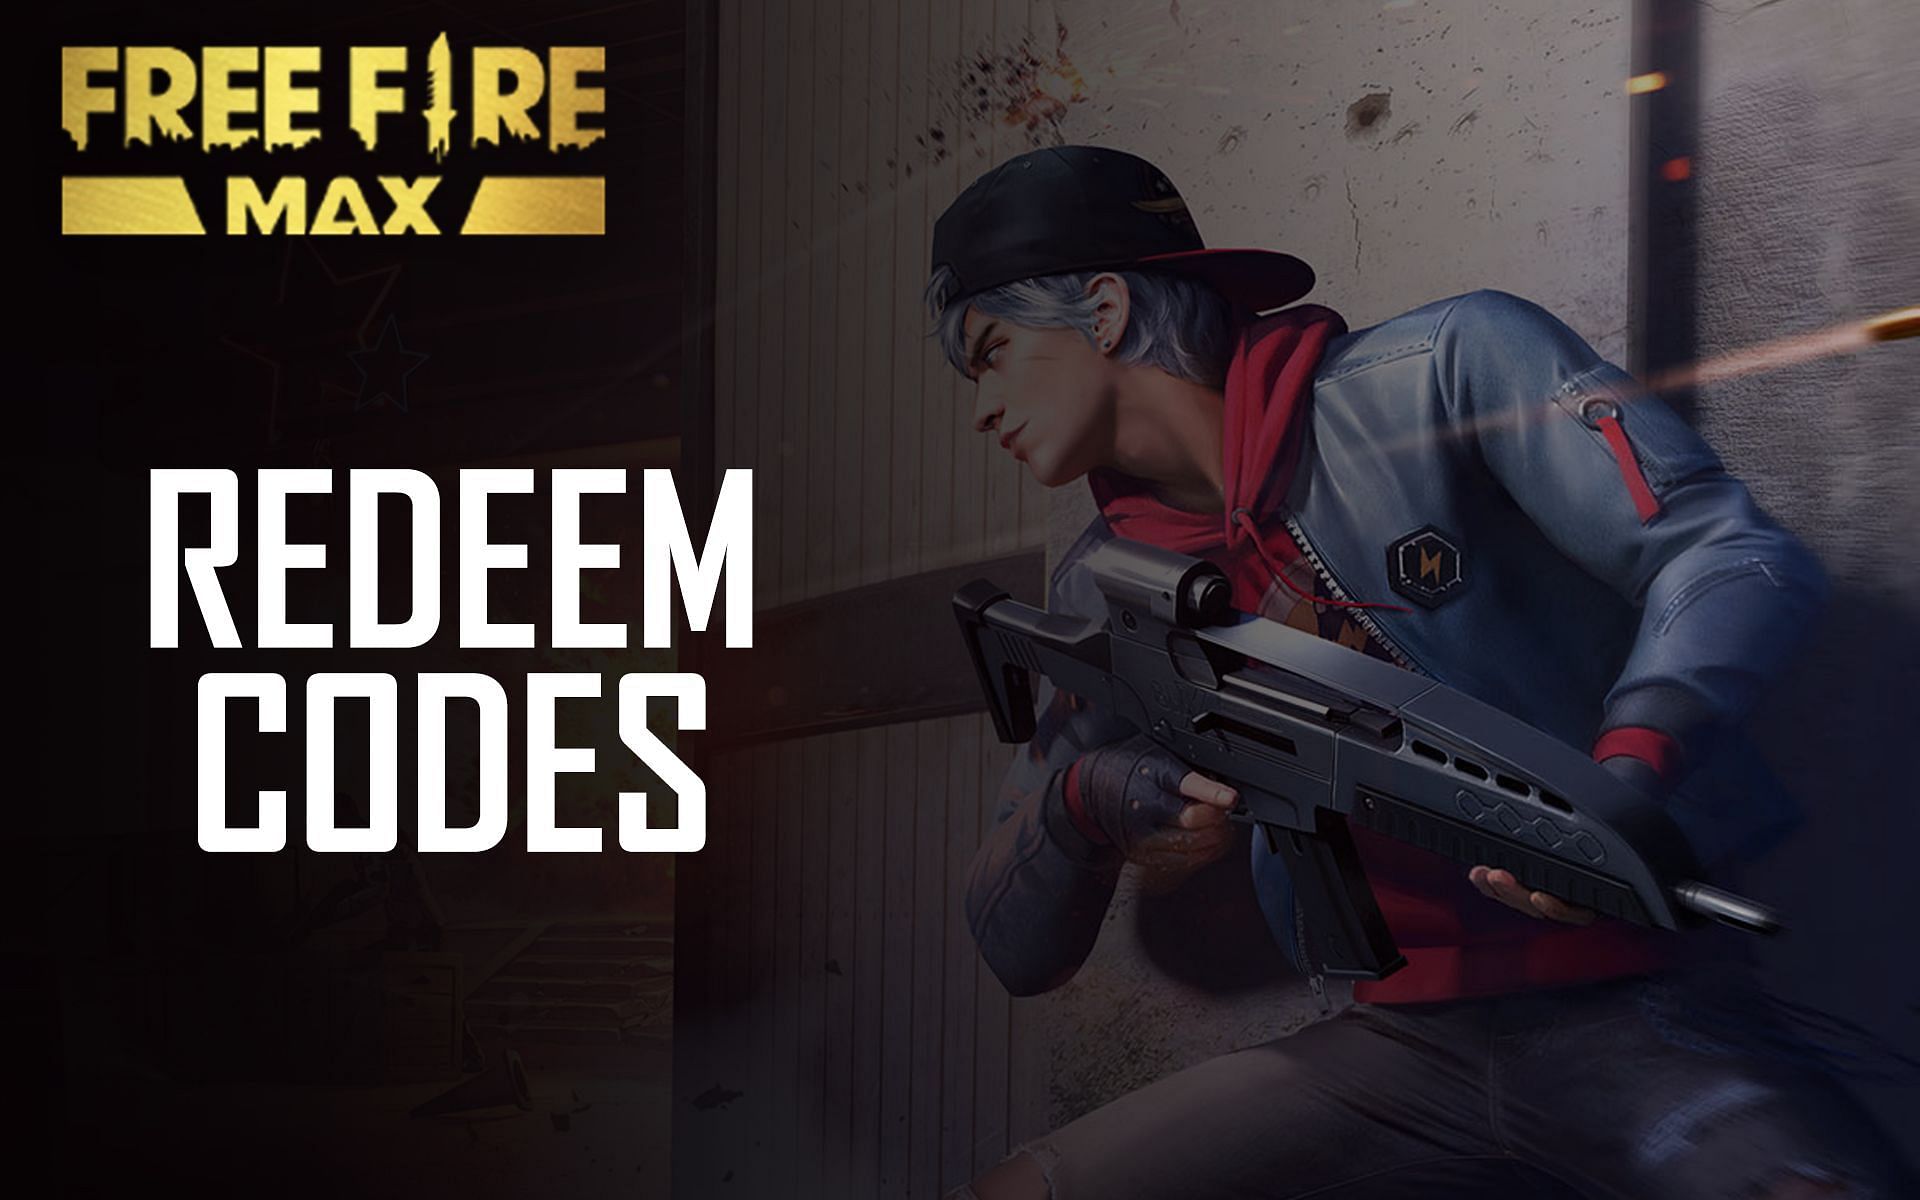 Daftar kode penukaran Free Fire MAX dengan hadiah legendaris sejauh ini (Juni 2022)